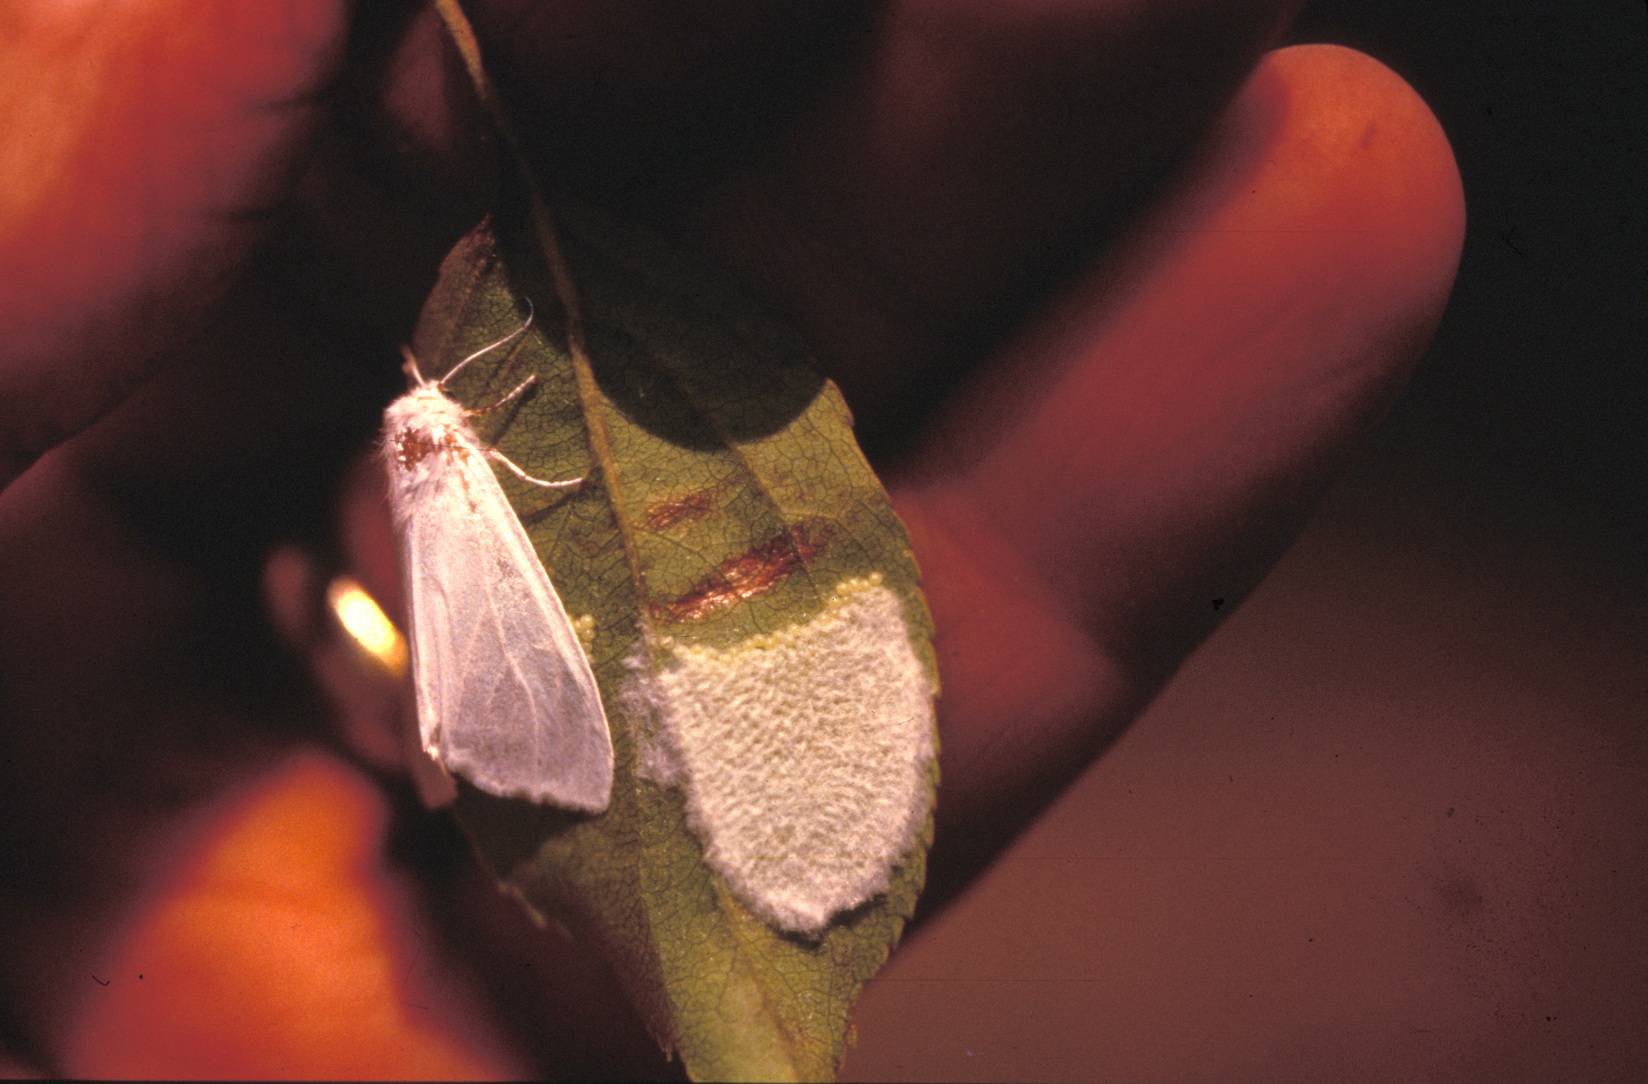 Adult fall webworm moth and eggs.